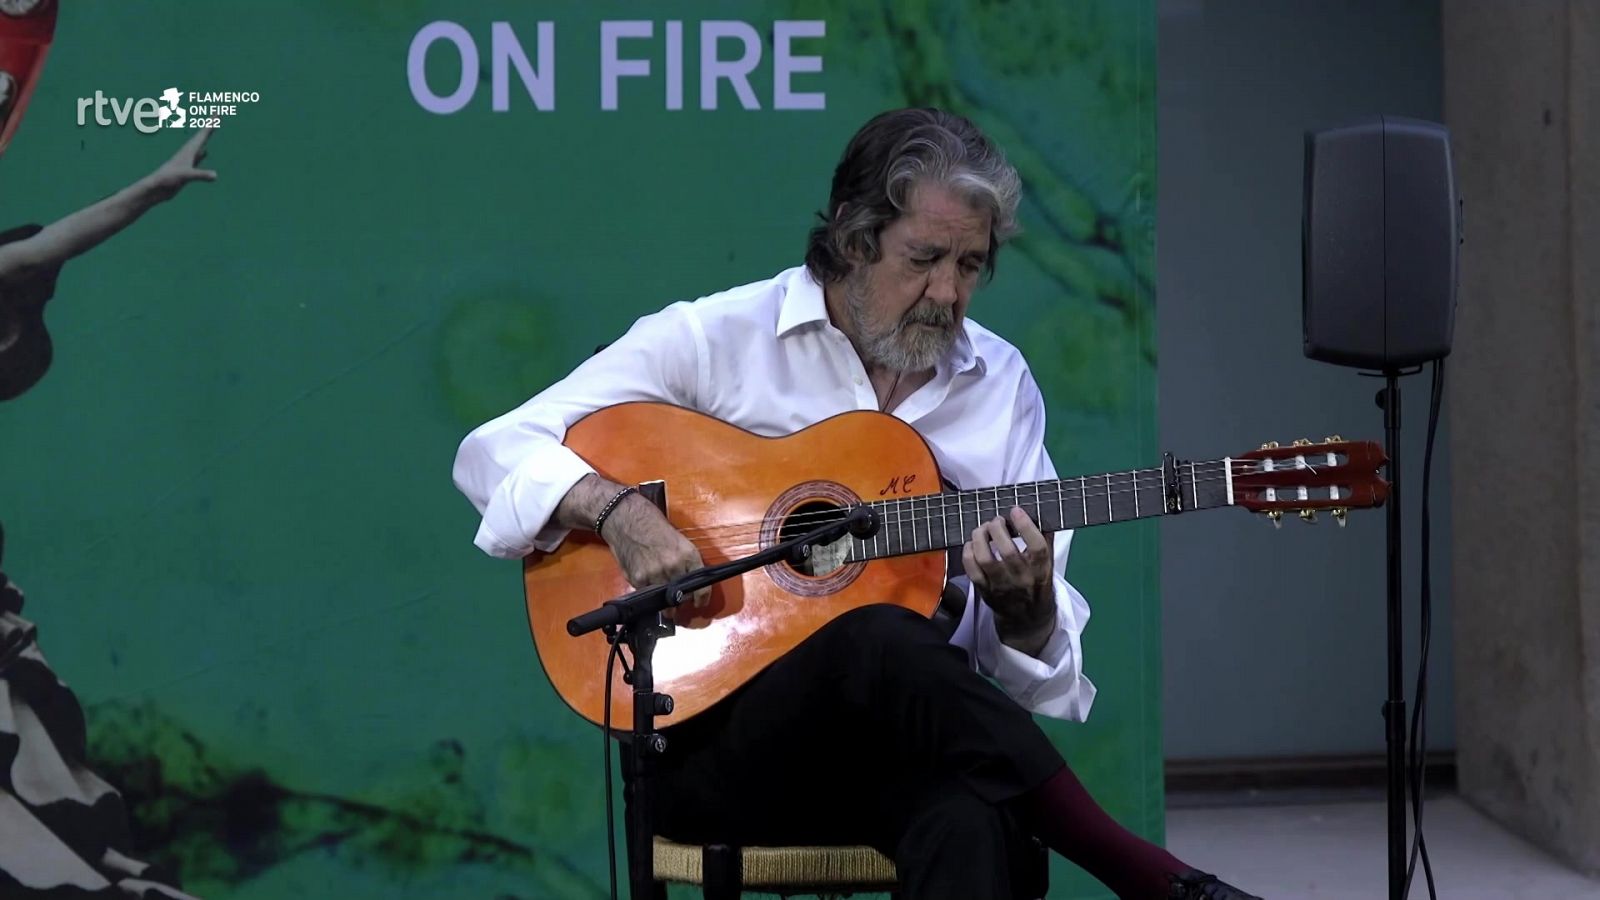 Festivales de verano - Flamenco On Fire: Programa resumen 2